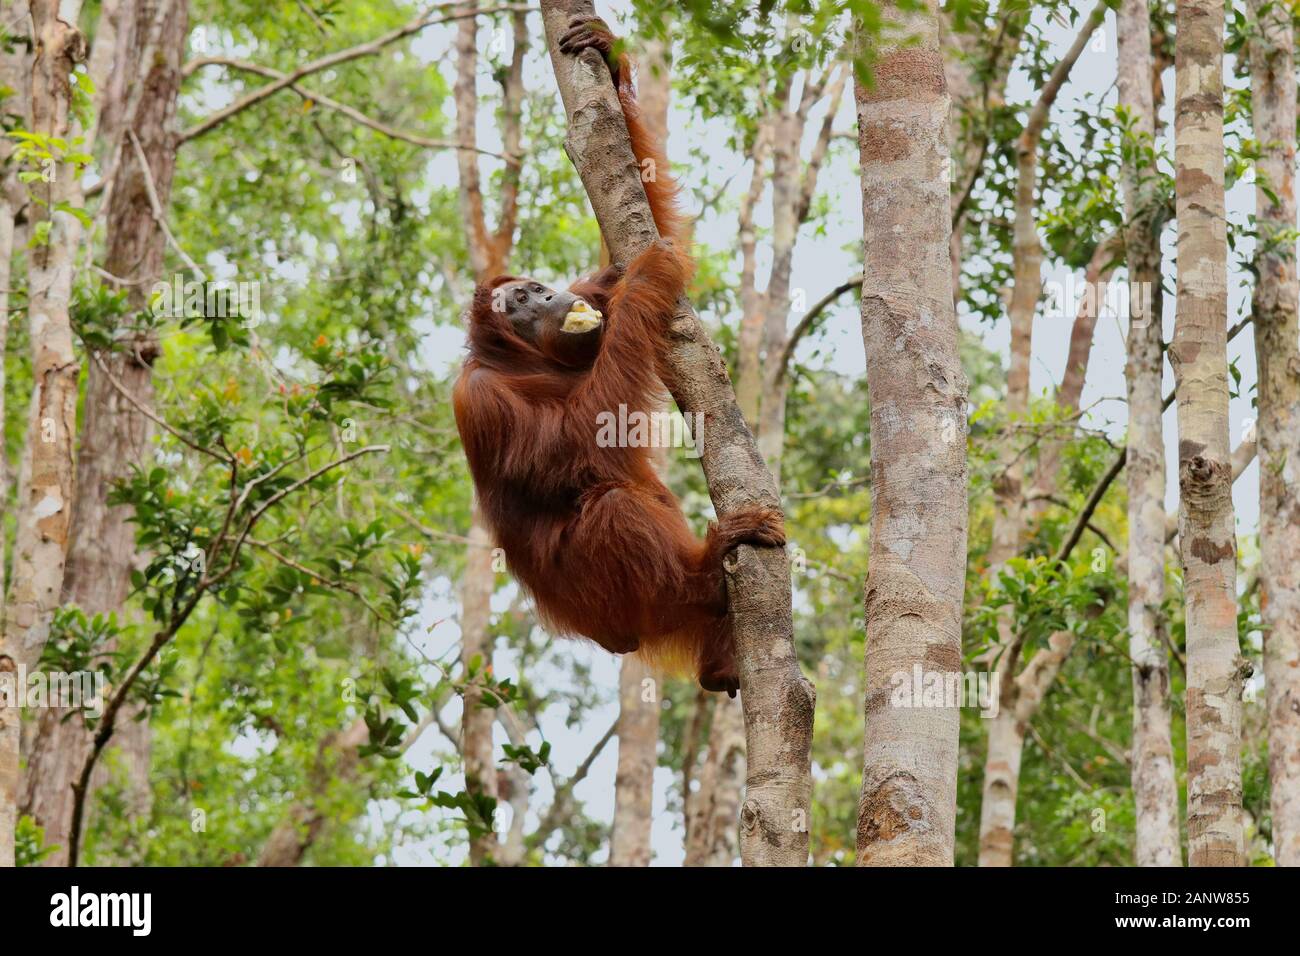 Wild Orang Utan in the jungle of Bormeo enjoying a banana Stock Photo